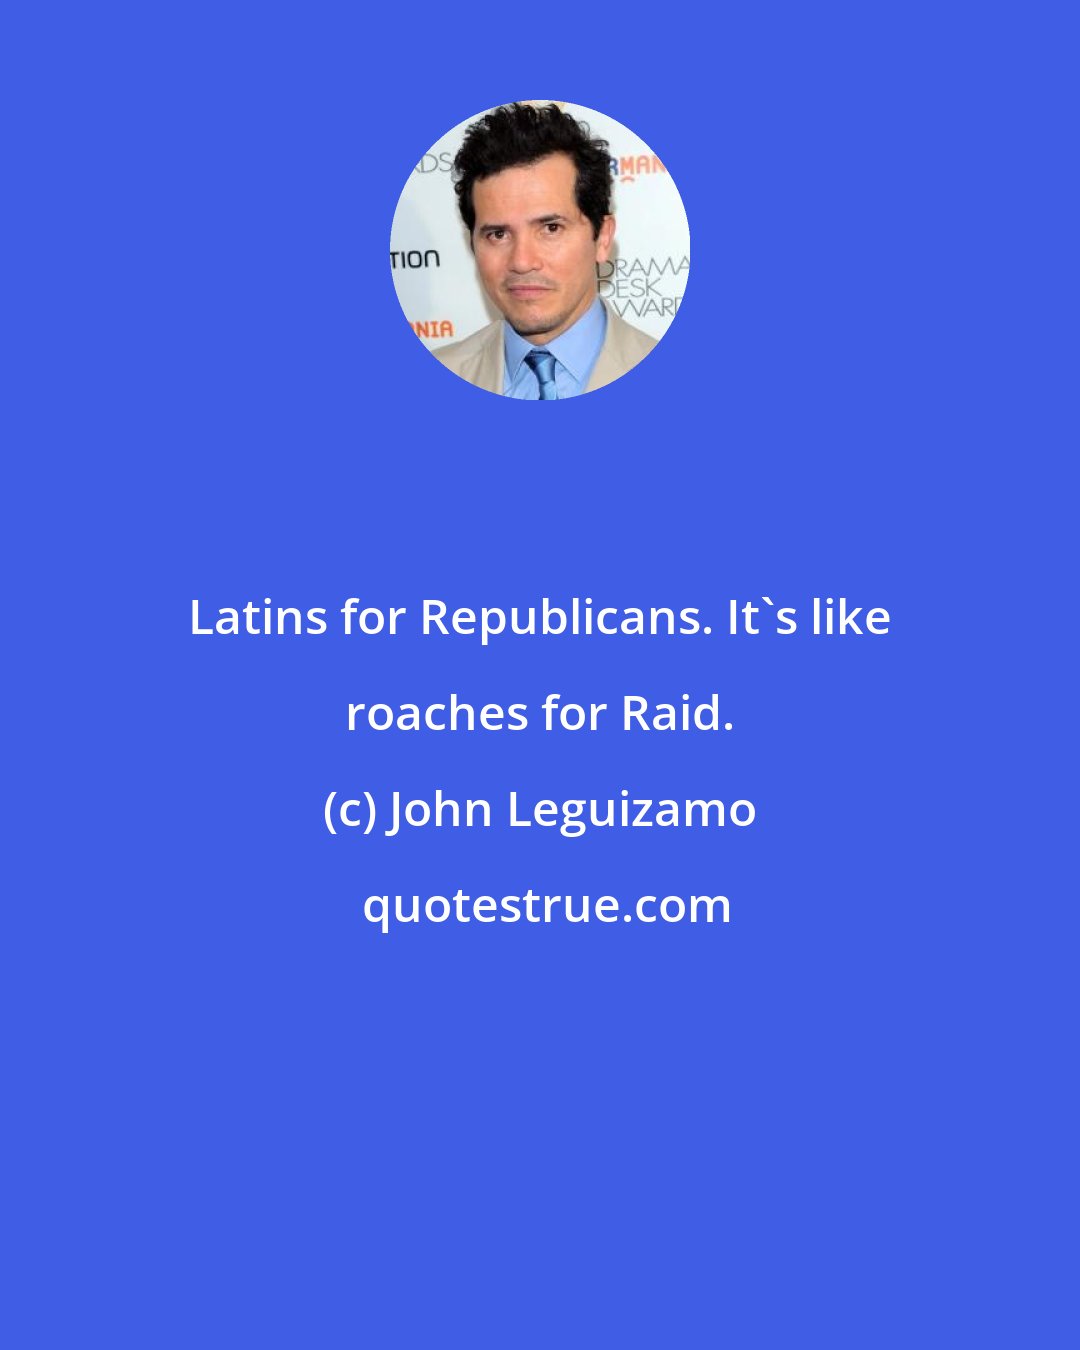 John Leguizamo: Latins for Republicans. It's like roaches for Raid.